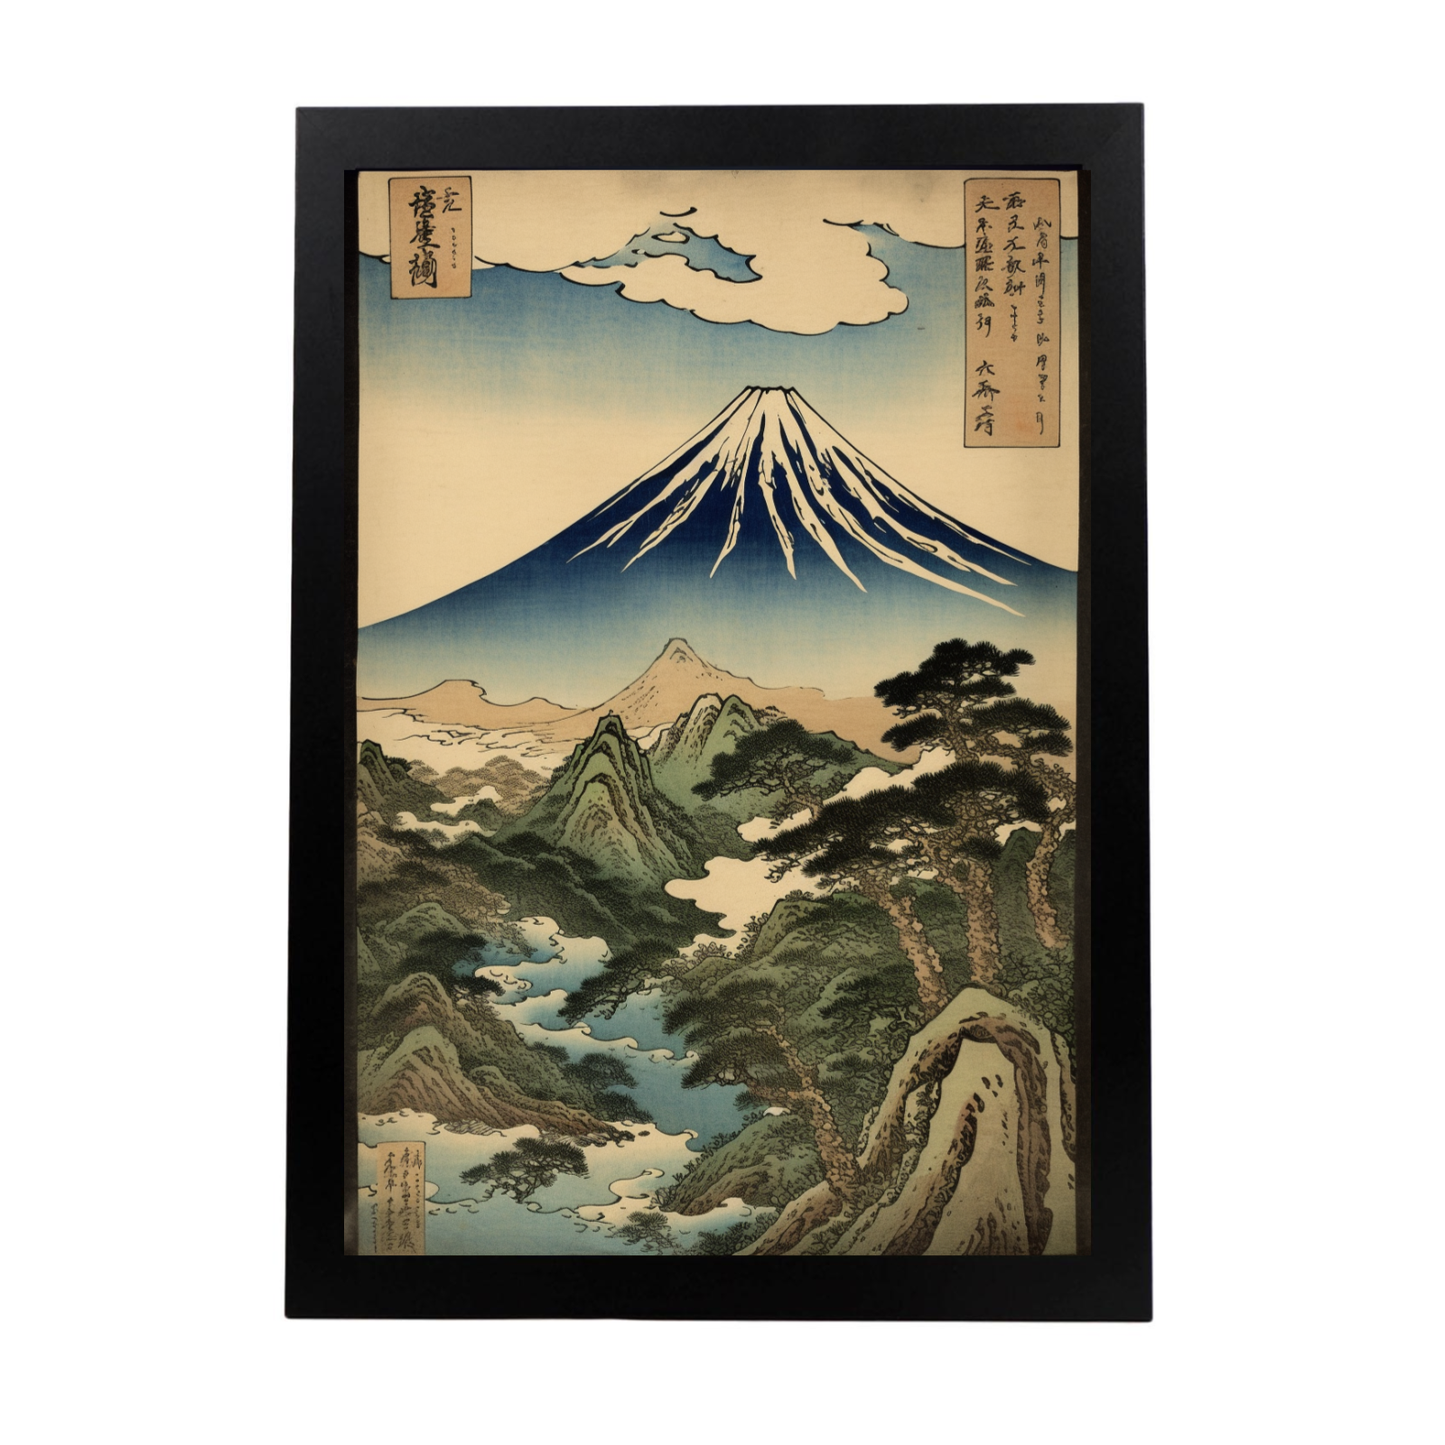 Cartel del artista Katsushika Hokusai